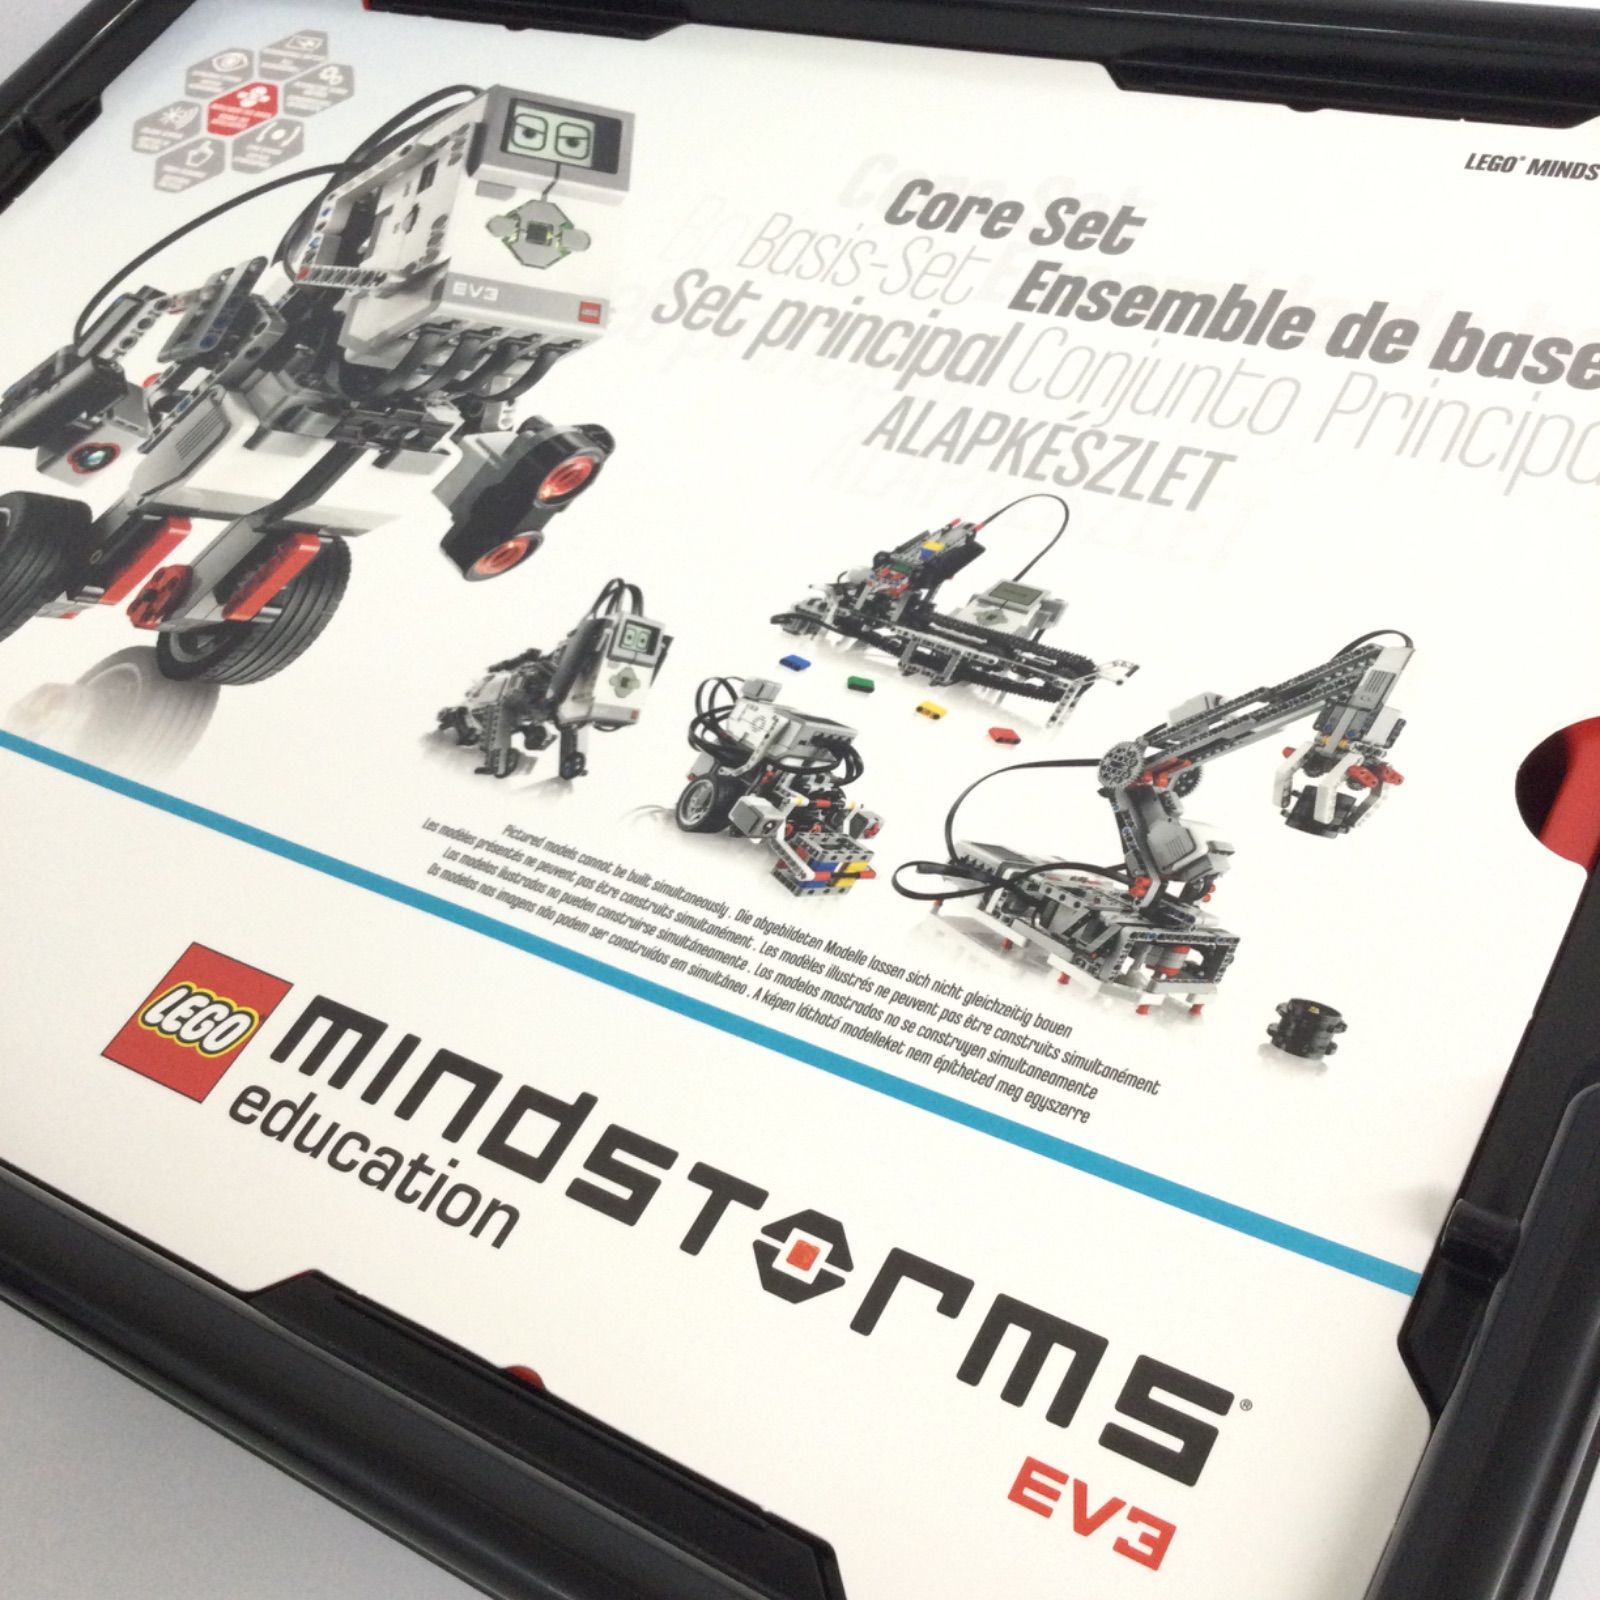 LEGO mindstorms education EV3 基本セット レゴマインドストーム